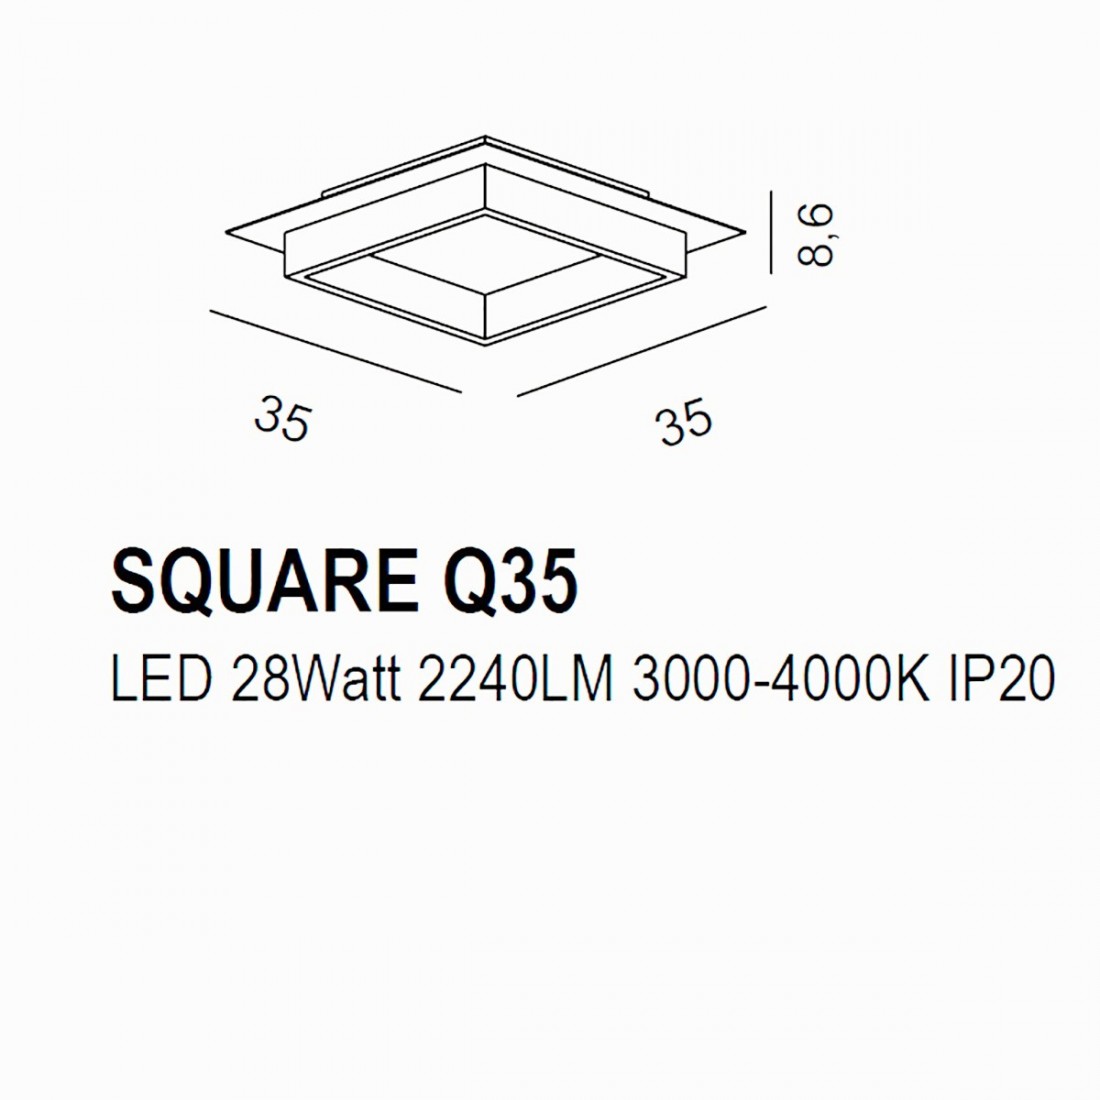 Promoingross LED Promoingross SQUARE Q35 MC cuivre interrupteur